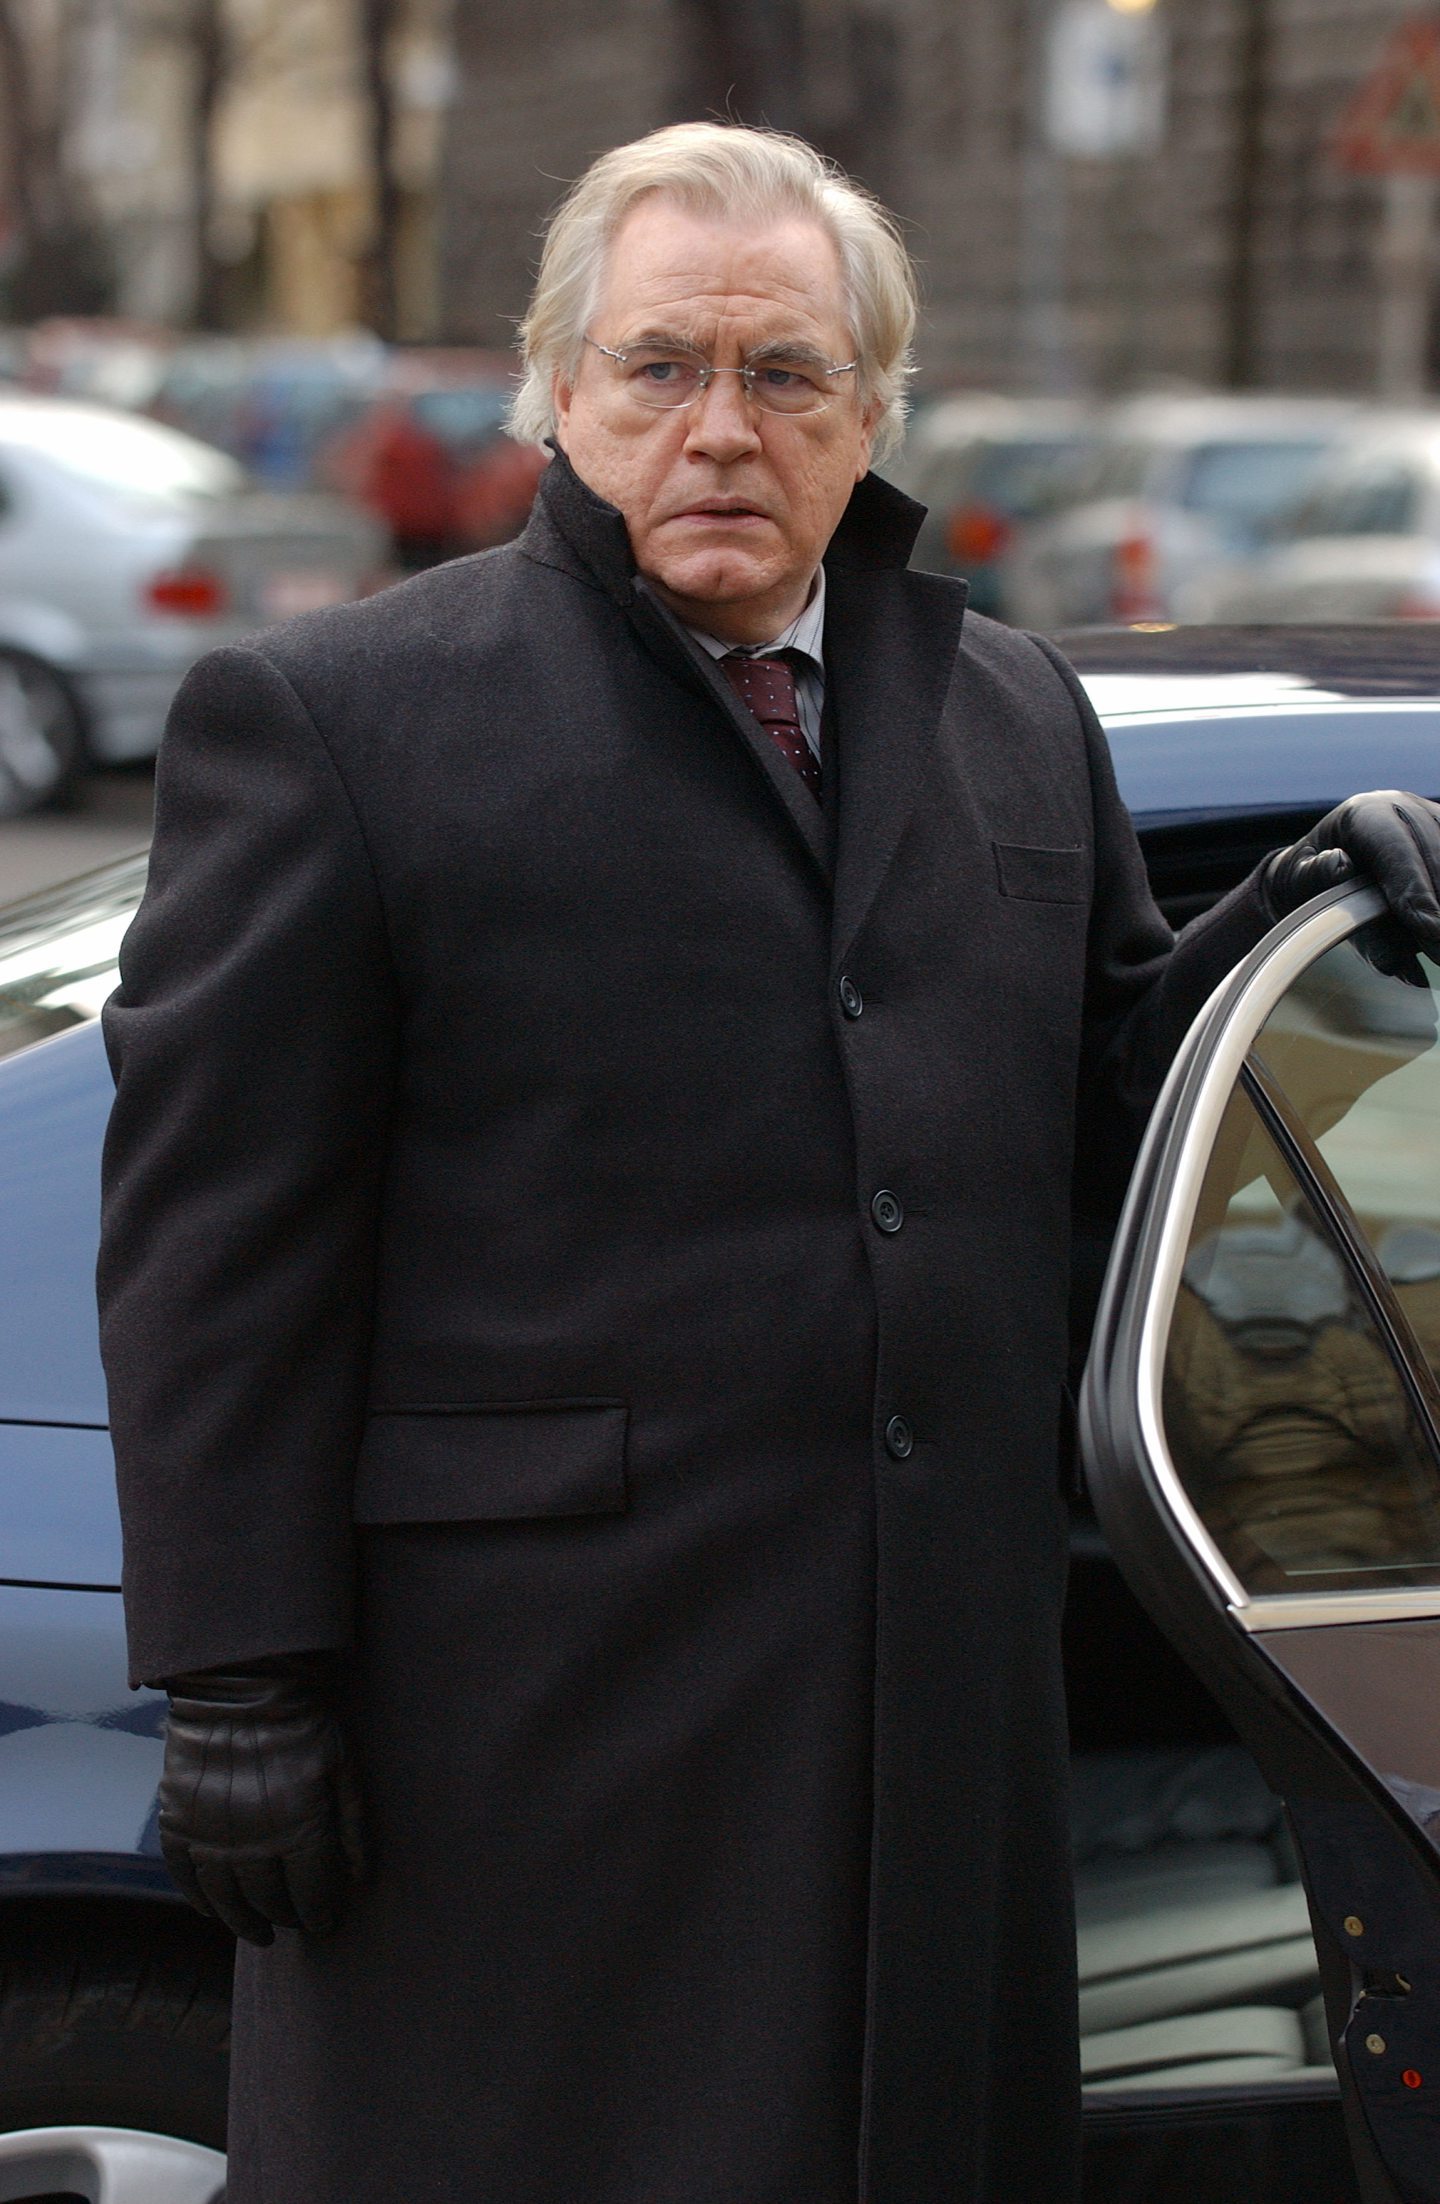 Brian Cox reprising his role as CIA boss Ward Abbott in The Bourne Supremacy. Image: Shutterstock.